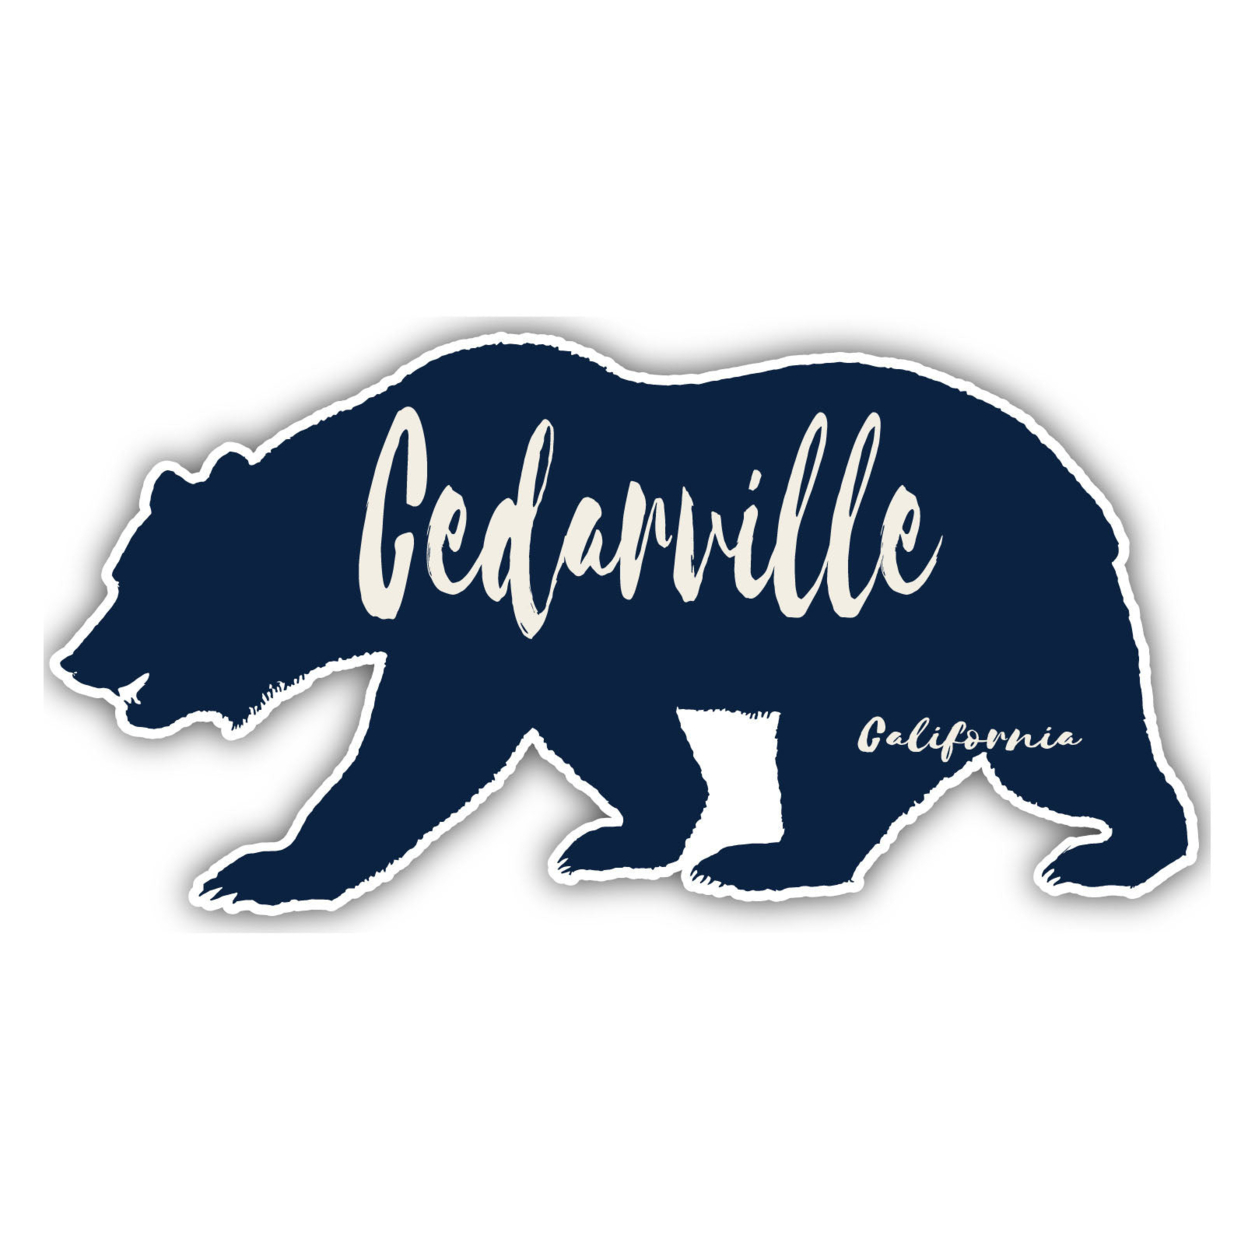 Cedarville California Souvenir Decorative Stickers (Choose Theme And Size) - Single Unit, 2-Inch, Bear